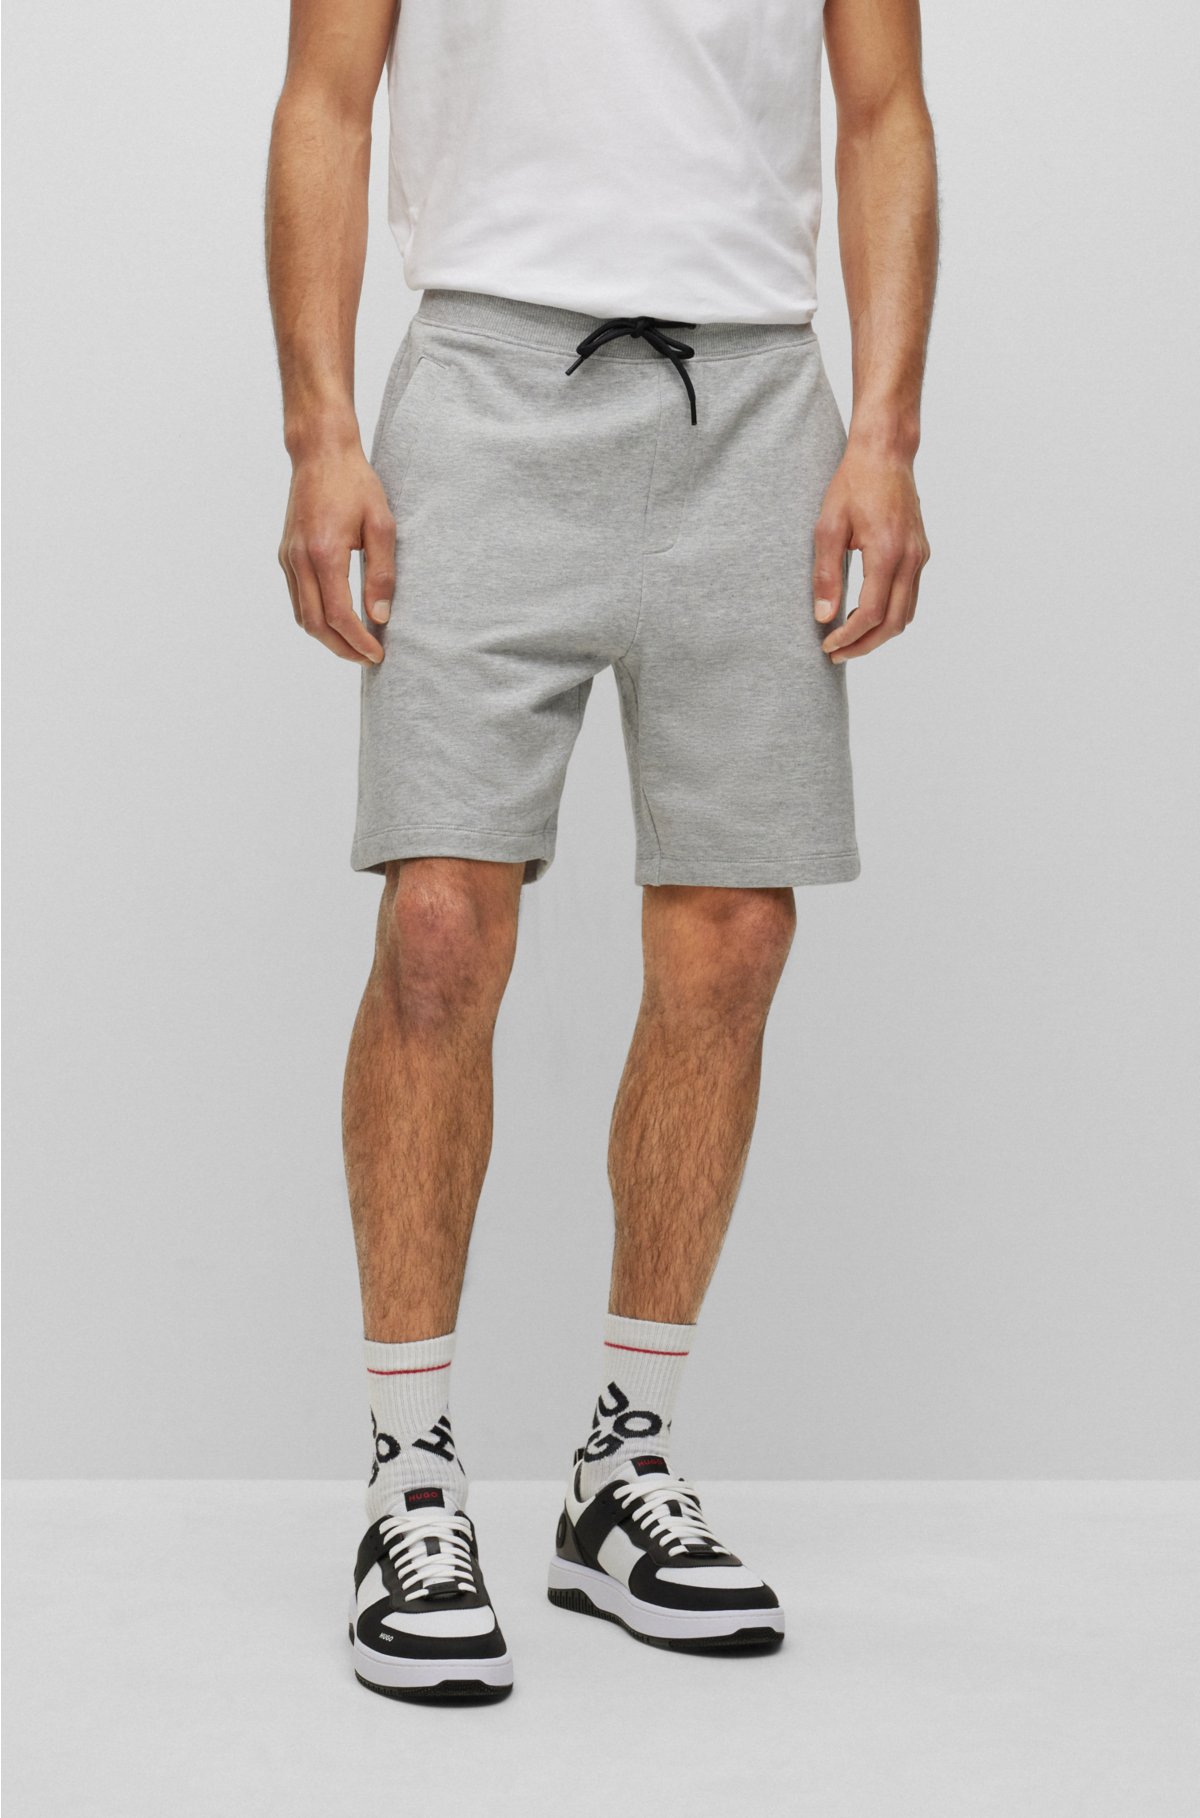 HUGO BOSS Regular Fit 100% Cotton Logo Sweat Shorts Medium Gray S / M NEW  w/Tags